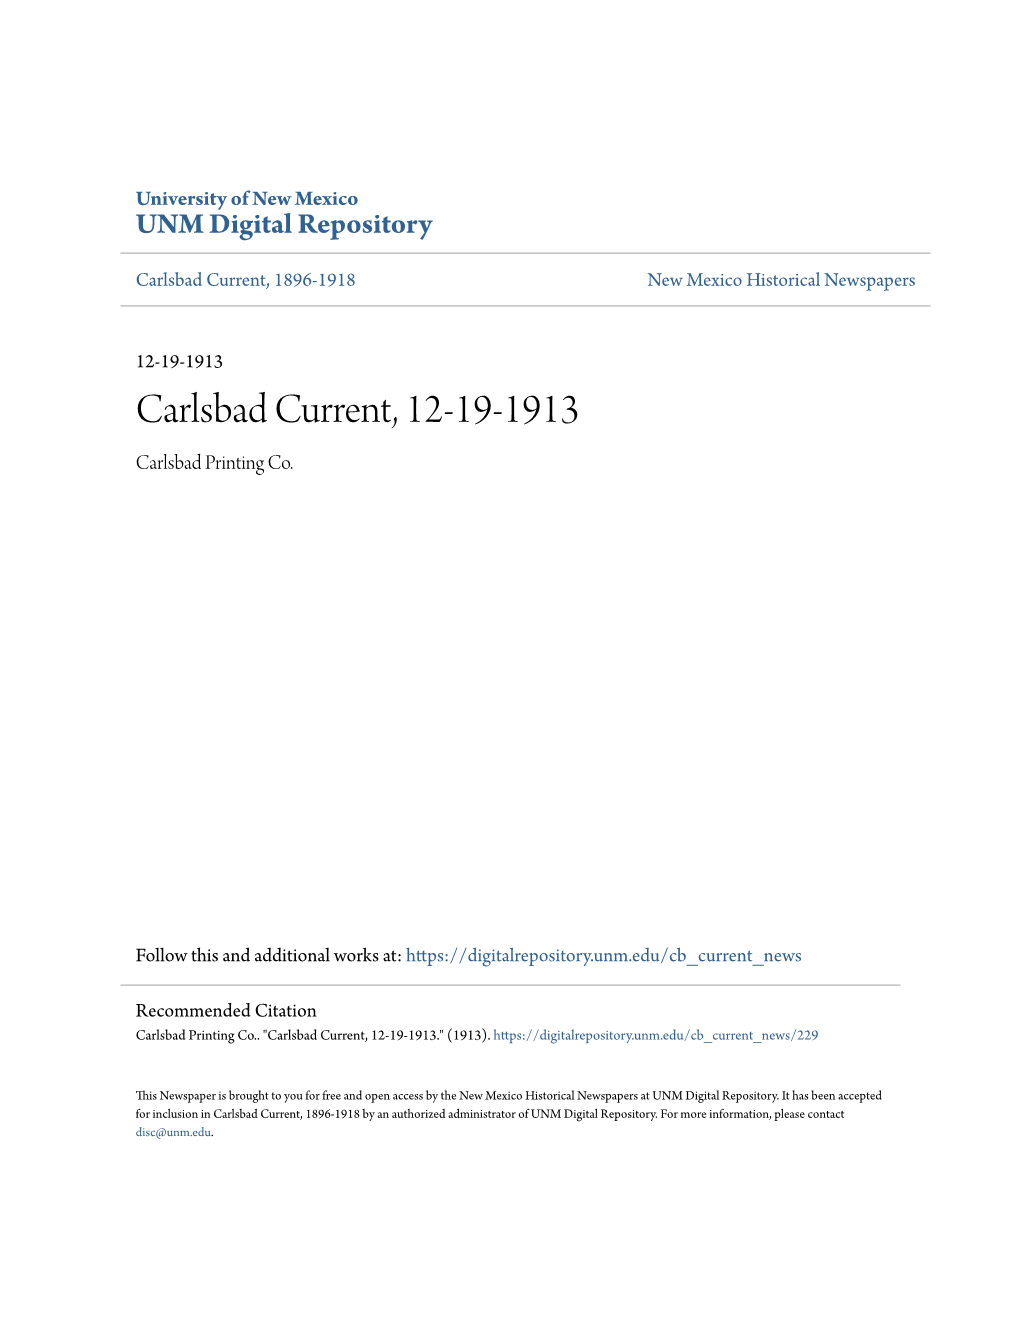 Carlsbad Current, 12-19-1913 Carlsbad Printing Co